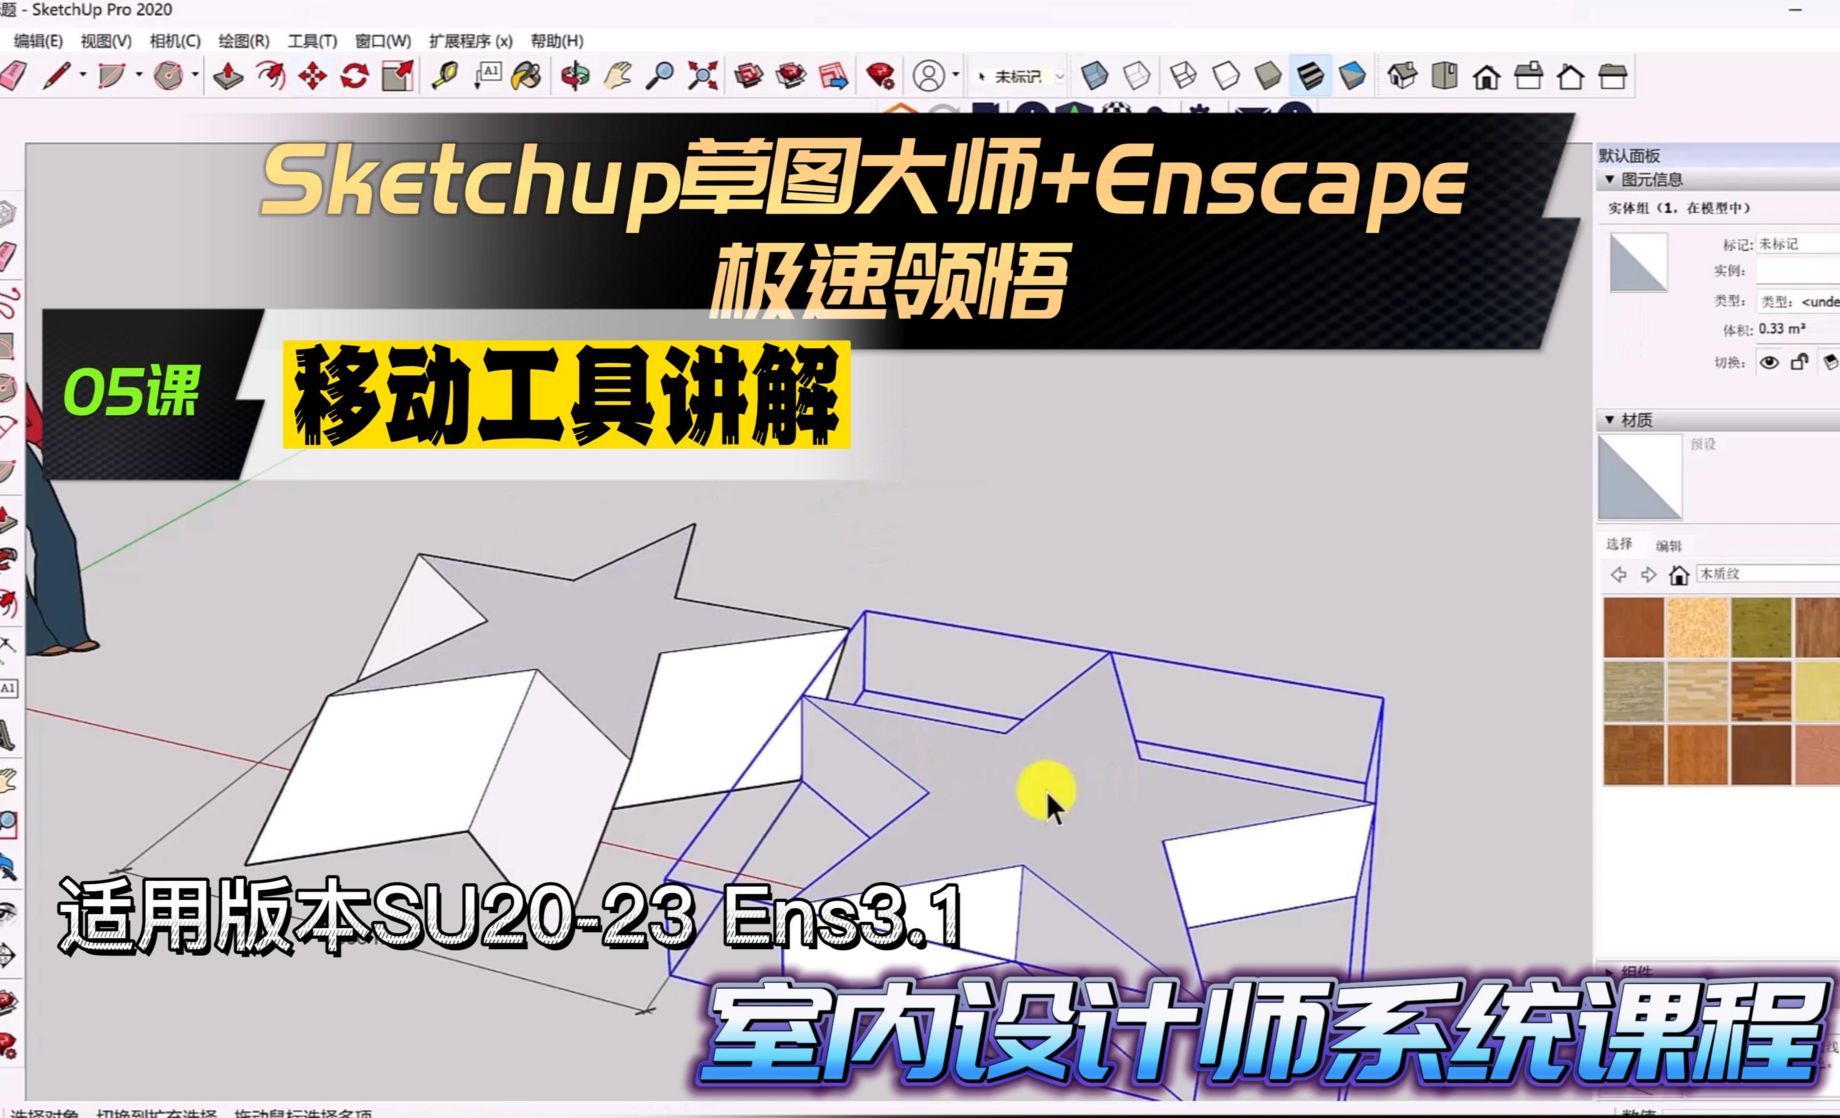 Sketchup+Enscape室内设计极速领悟-移动工具